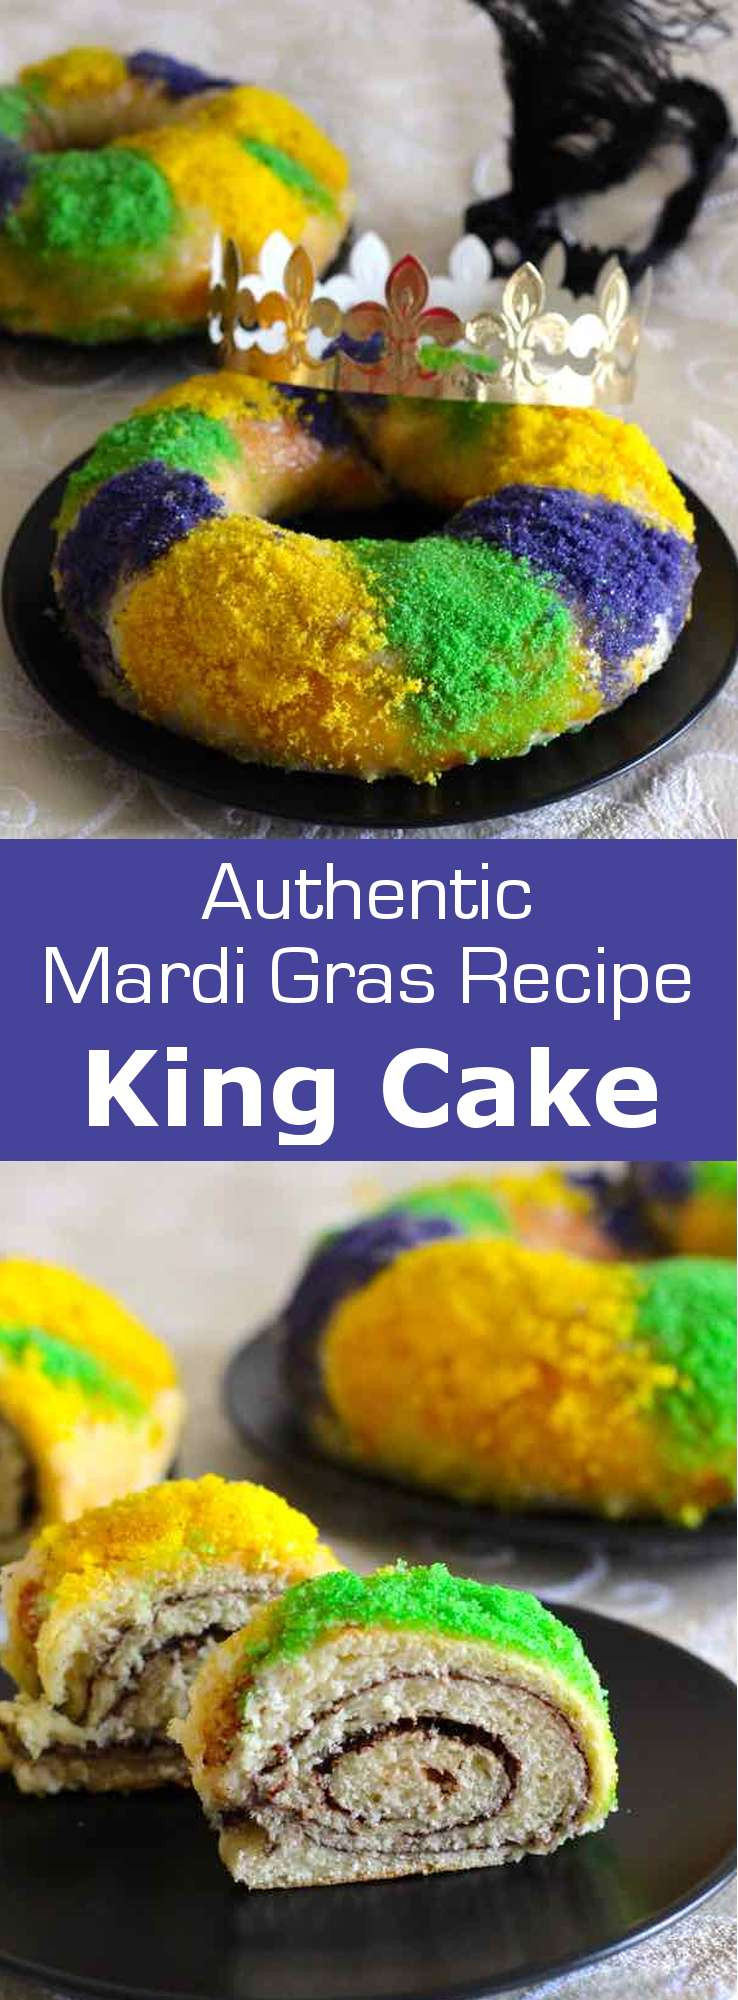 Mardi Gras King Cake Recipe
 King Cake Traditional Mardi Gras Recipe